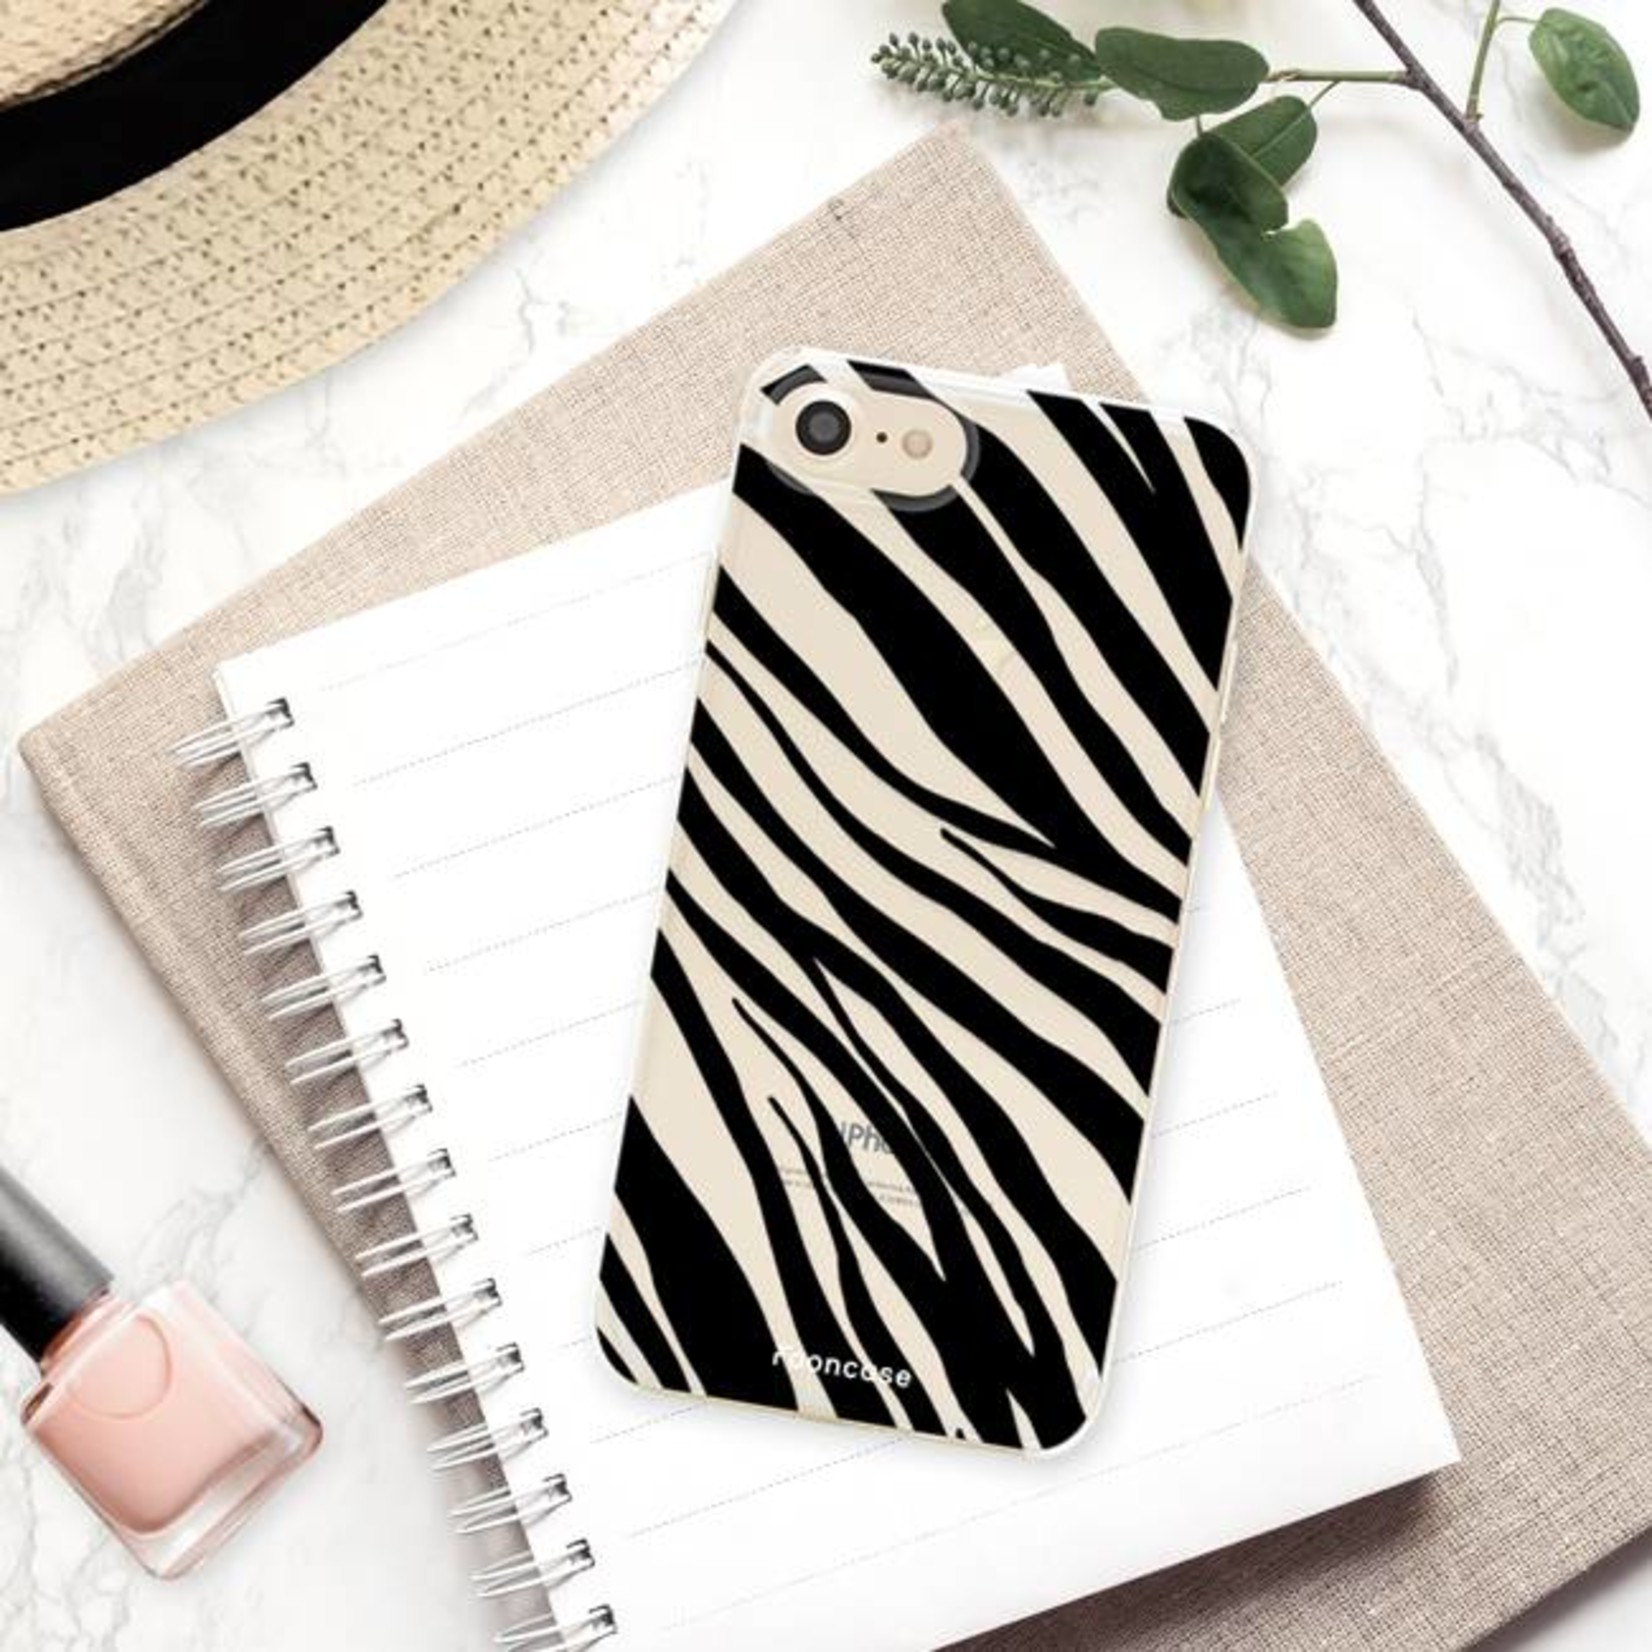 FOONCASE Iphone 7 Cover - Zebra